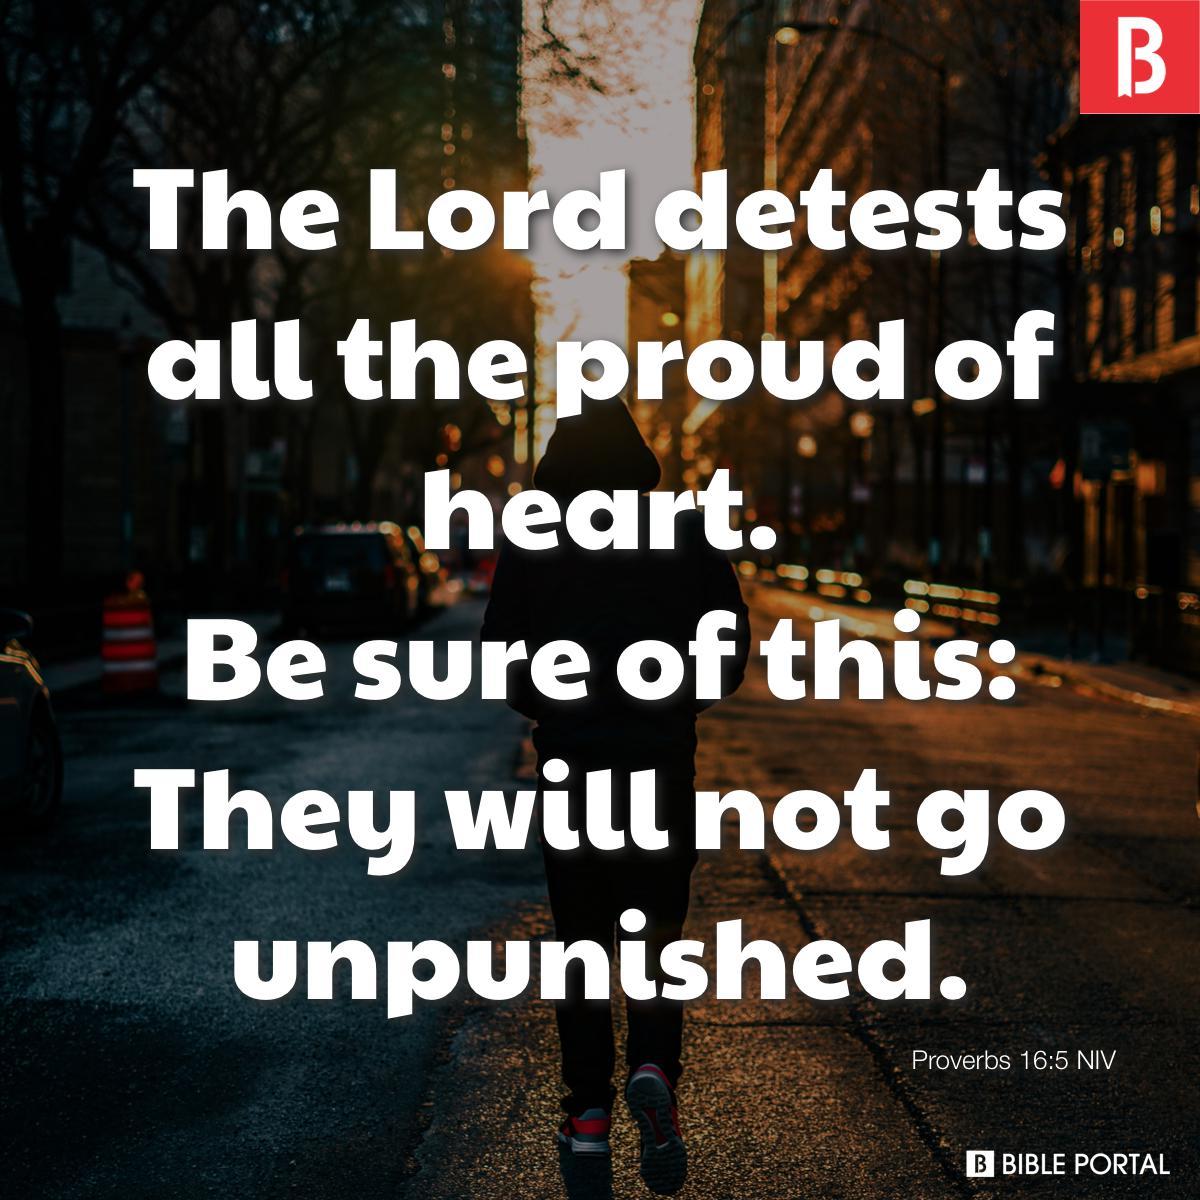 Proverbs 16:5 NIV